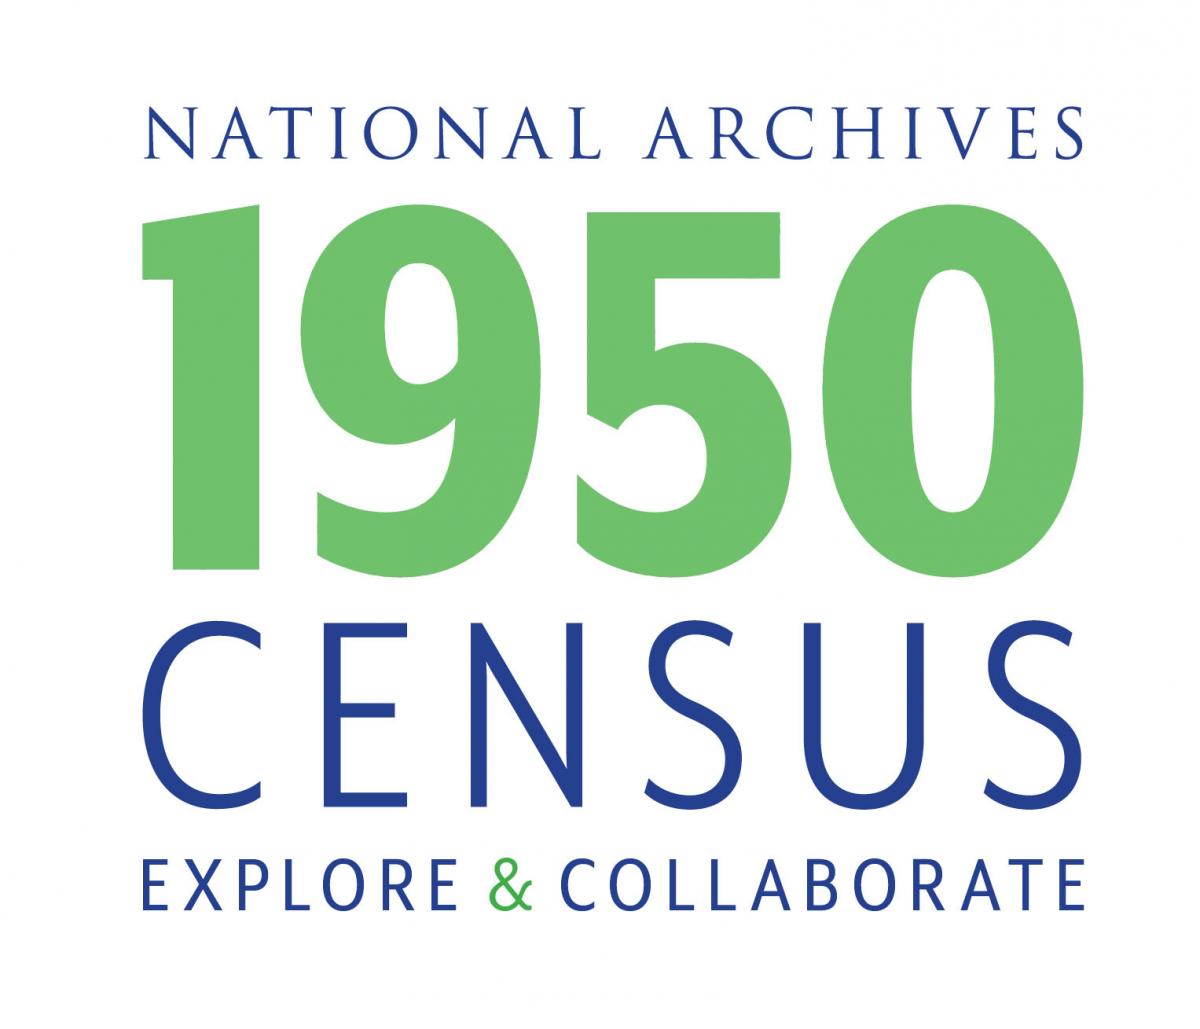 Search the 1950 Census